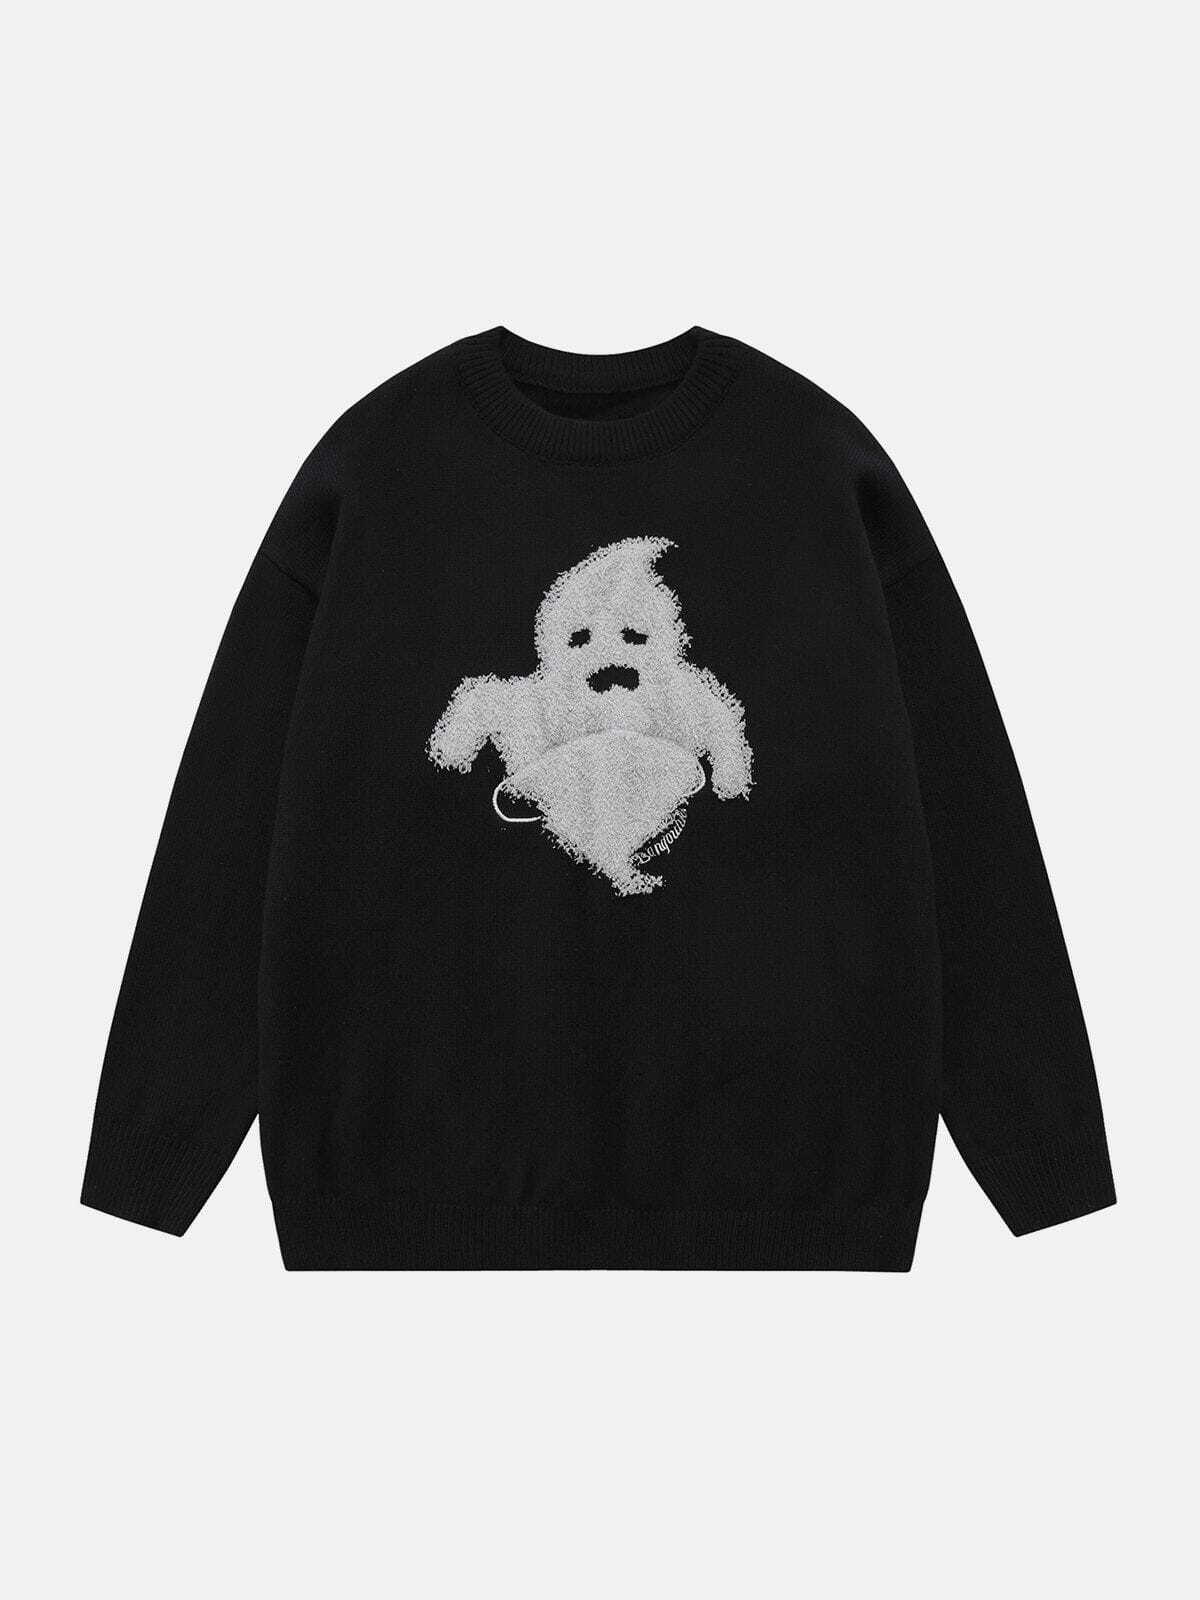 flocked ghost sweater edgy y2k streetwear charm 4159